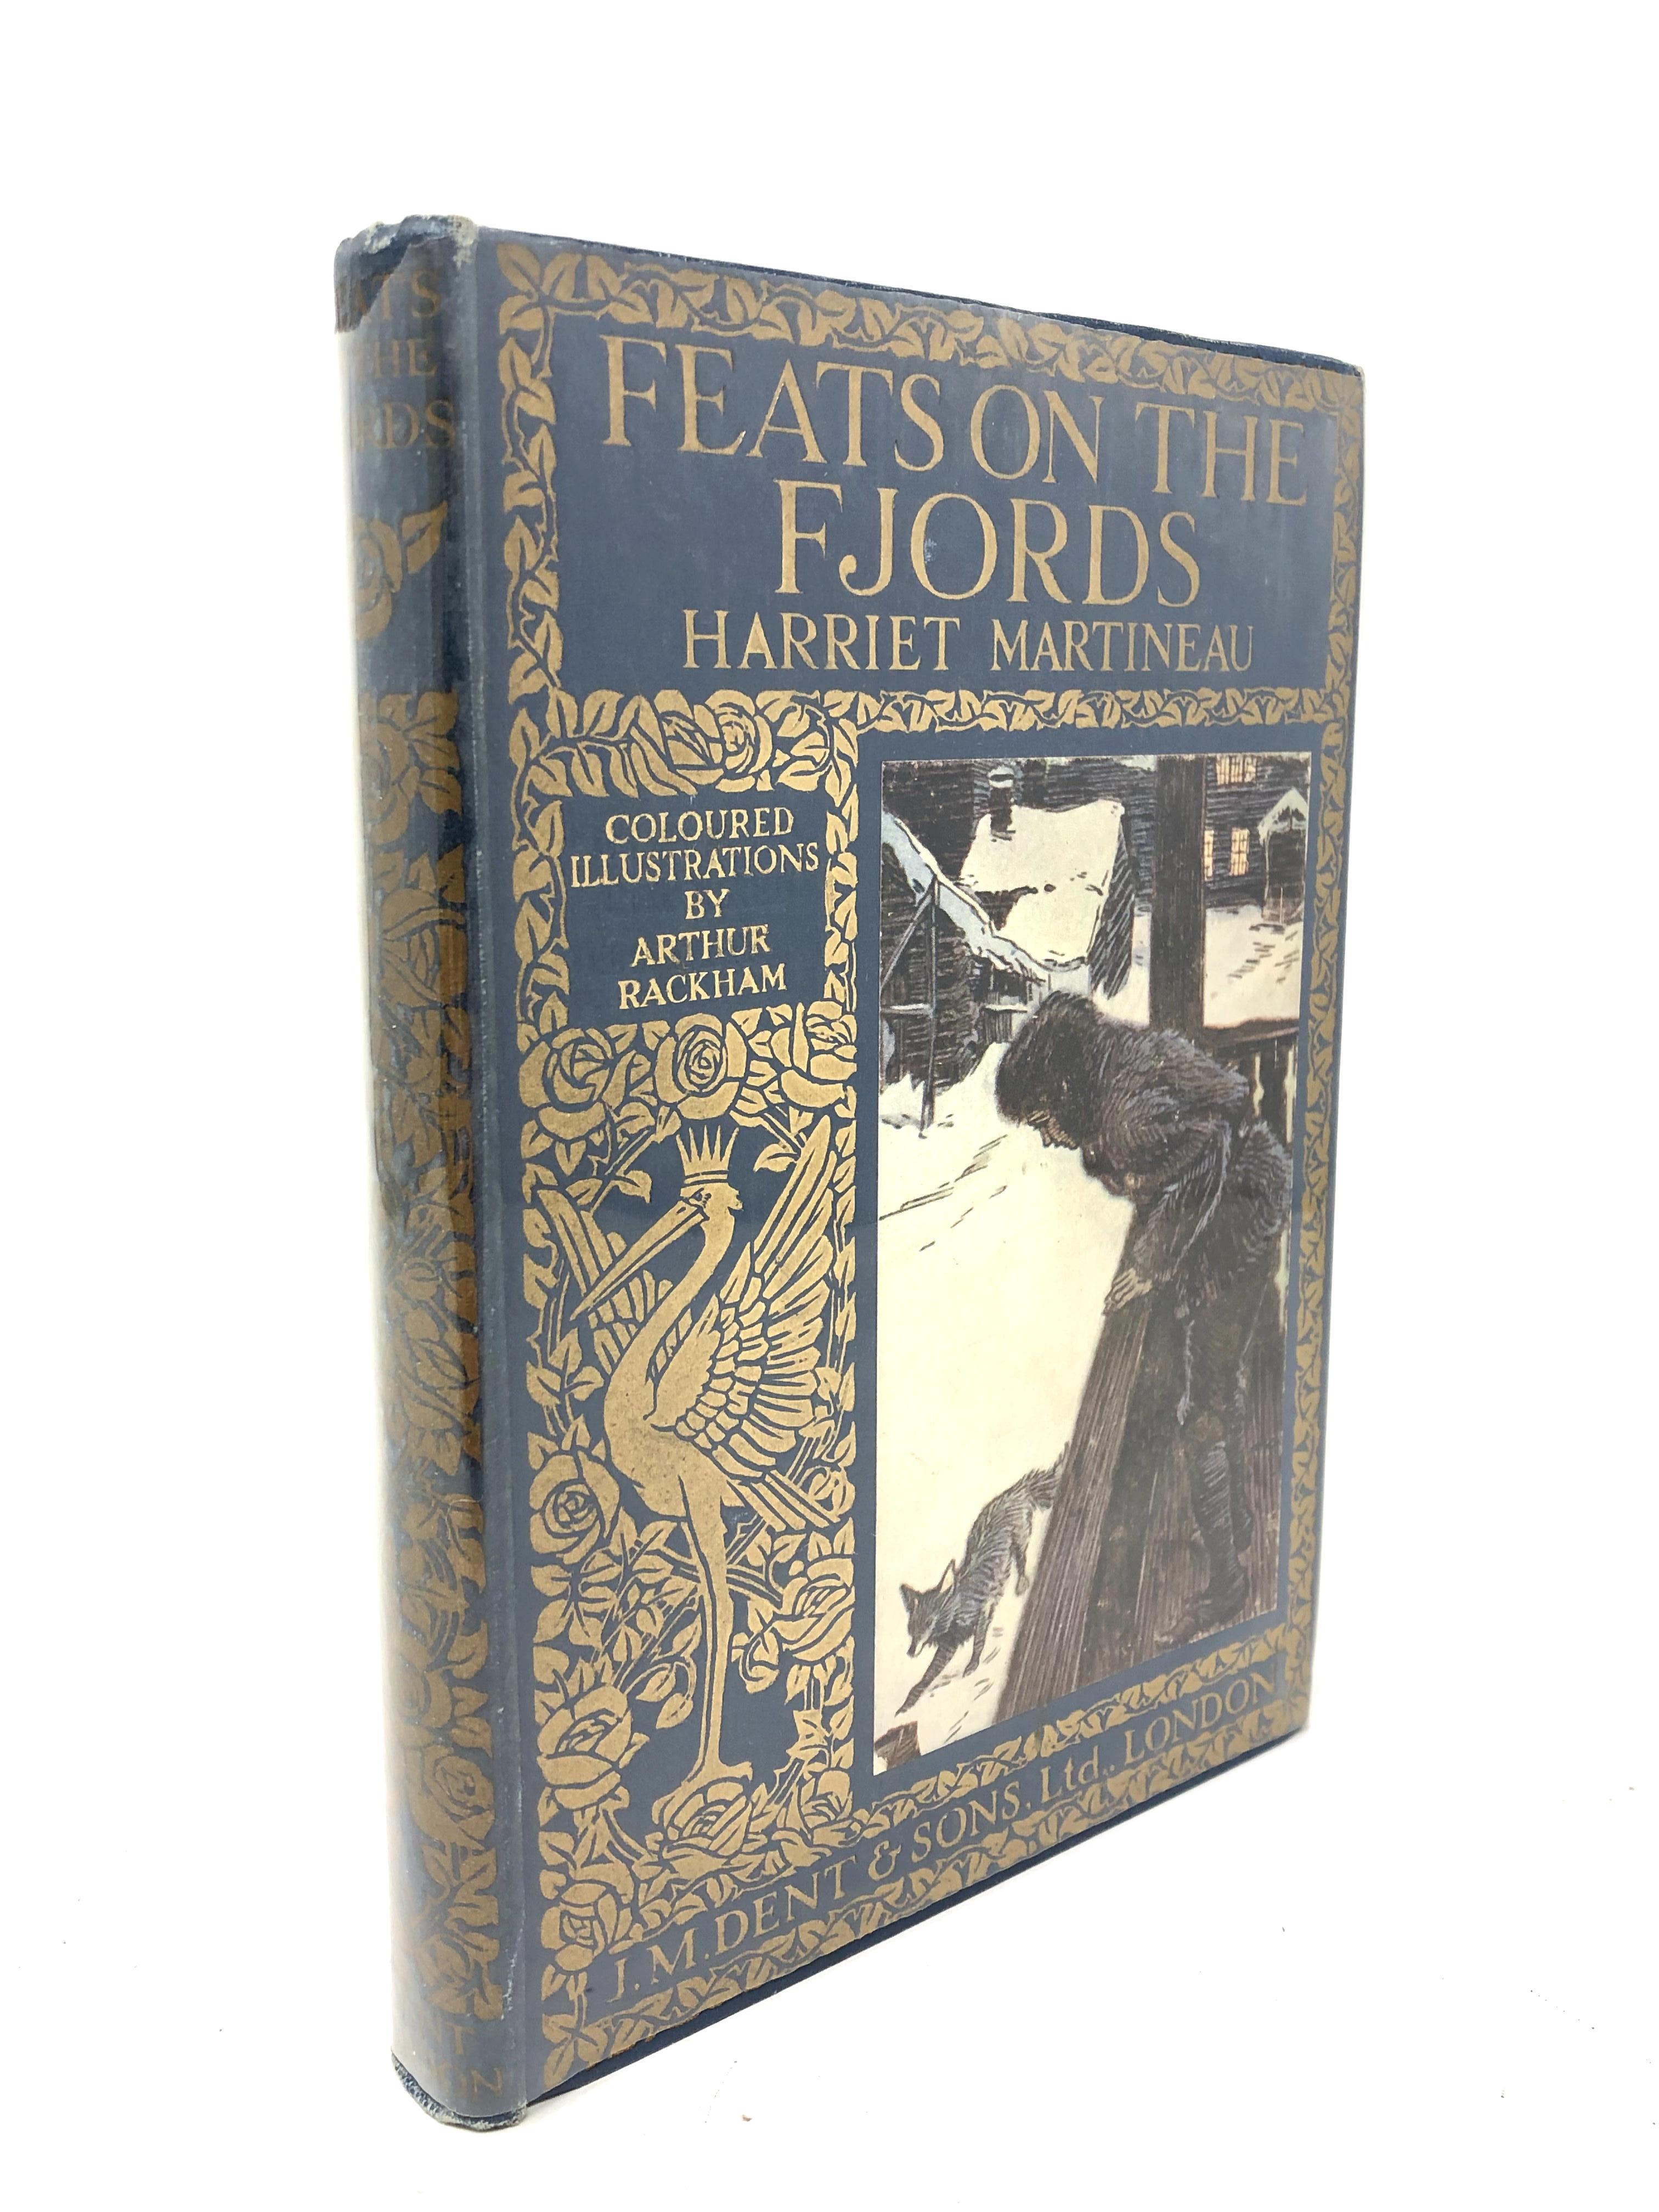 Arthur Rackham, 1867 - 1939 (Illustrator) : Feats on the Fjords by Harriet Martineau, a volume,